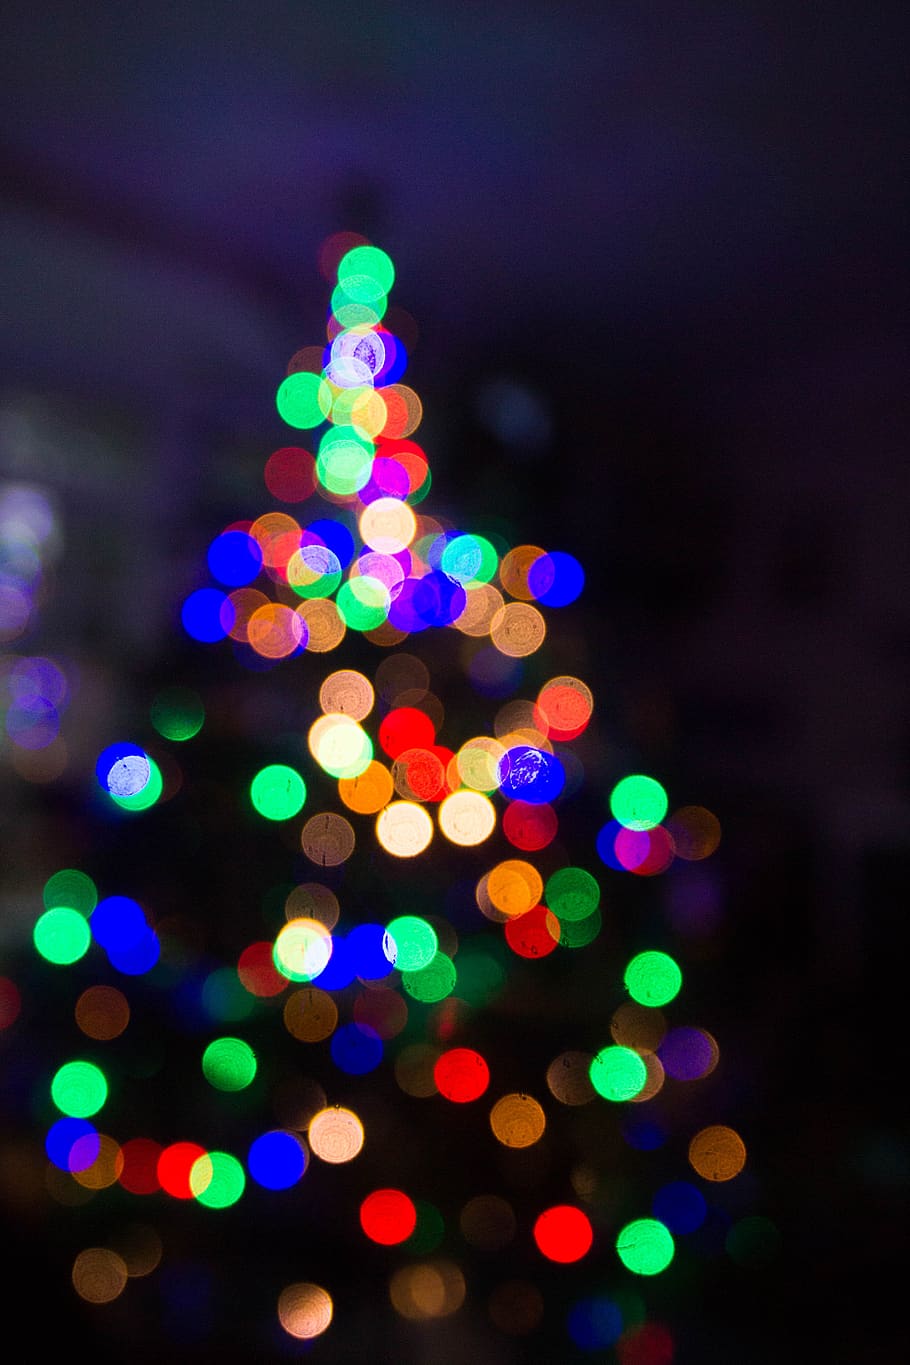 dark, night, christmas, colorful, lights, lighting, bokeh, illuminated, decoration, multi colored